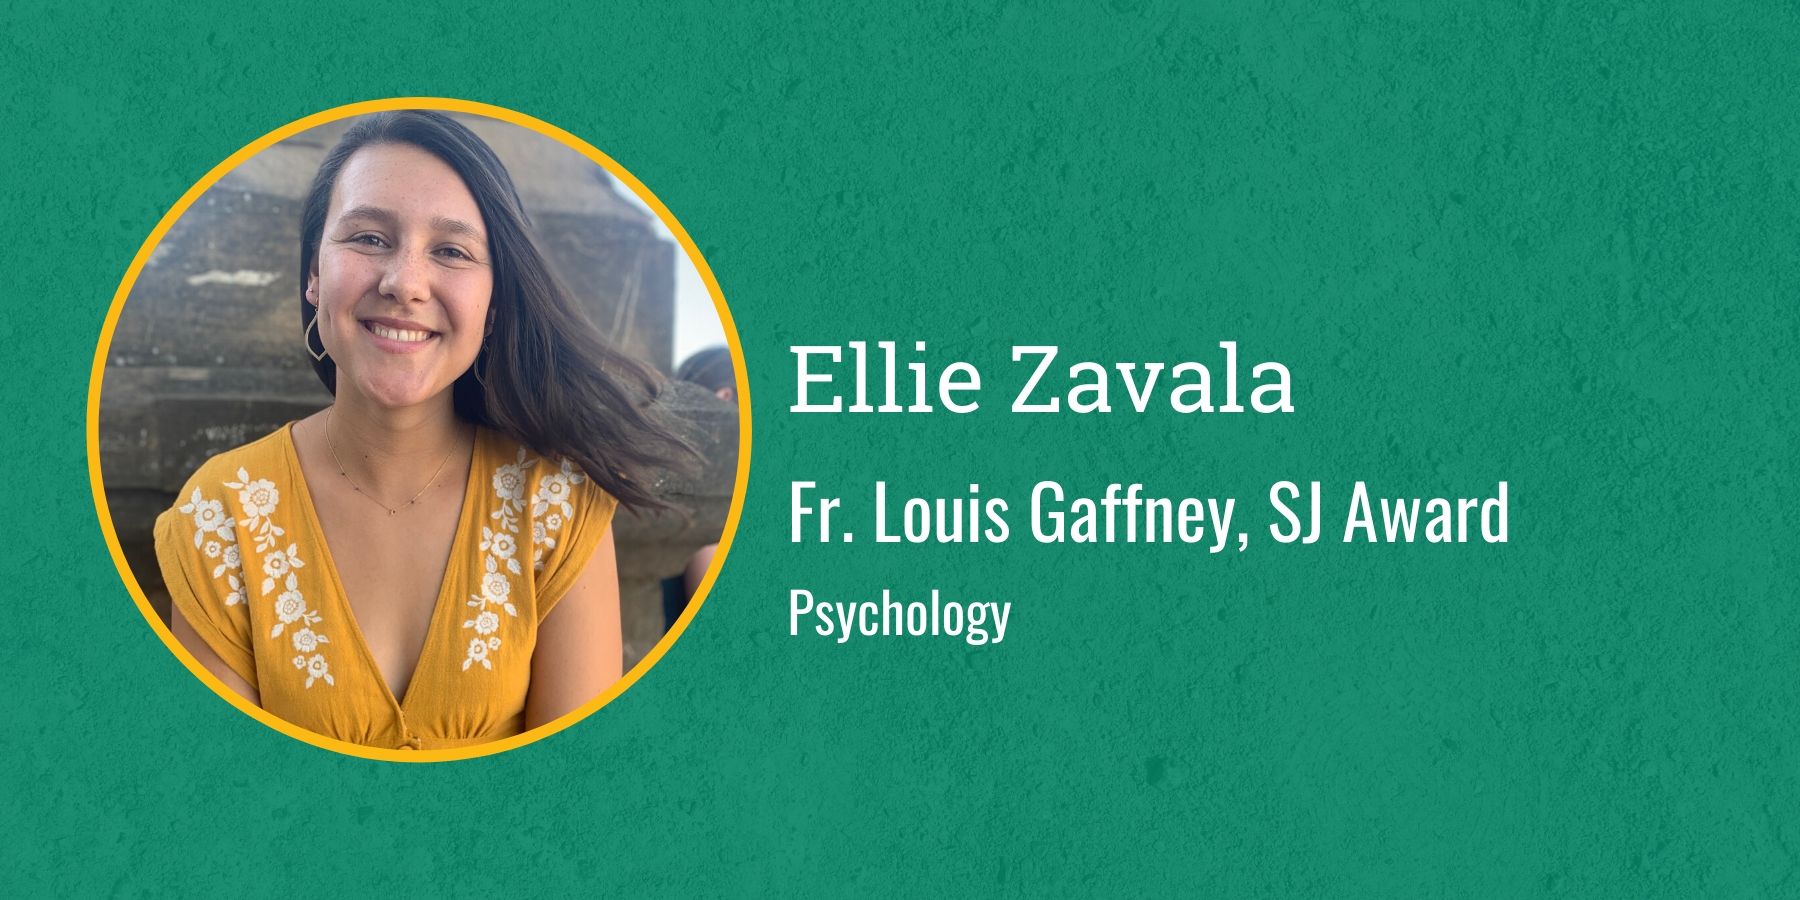 Photo of Ellie Zavala and text Fr. Louis Gaffney SJ award, Psychology